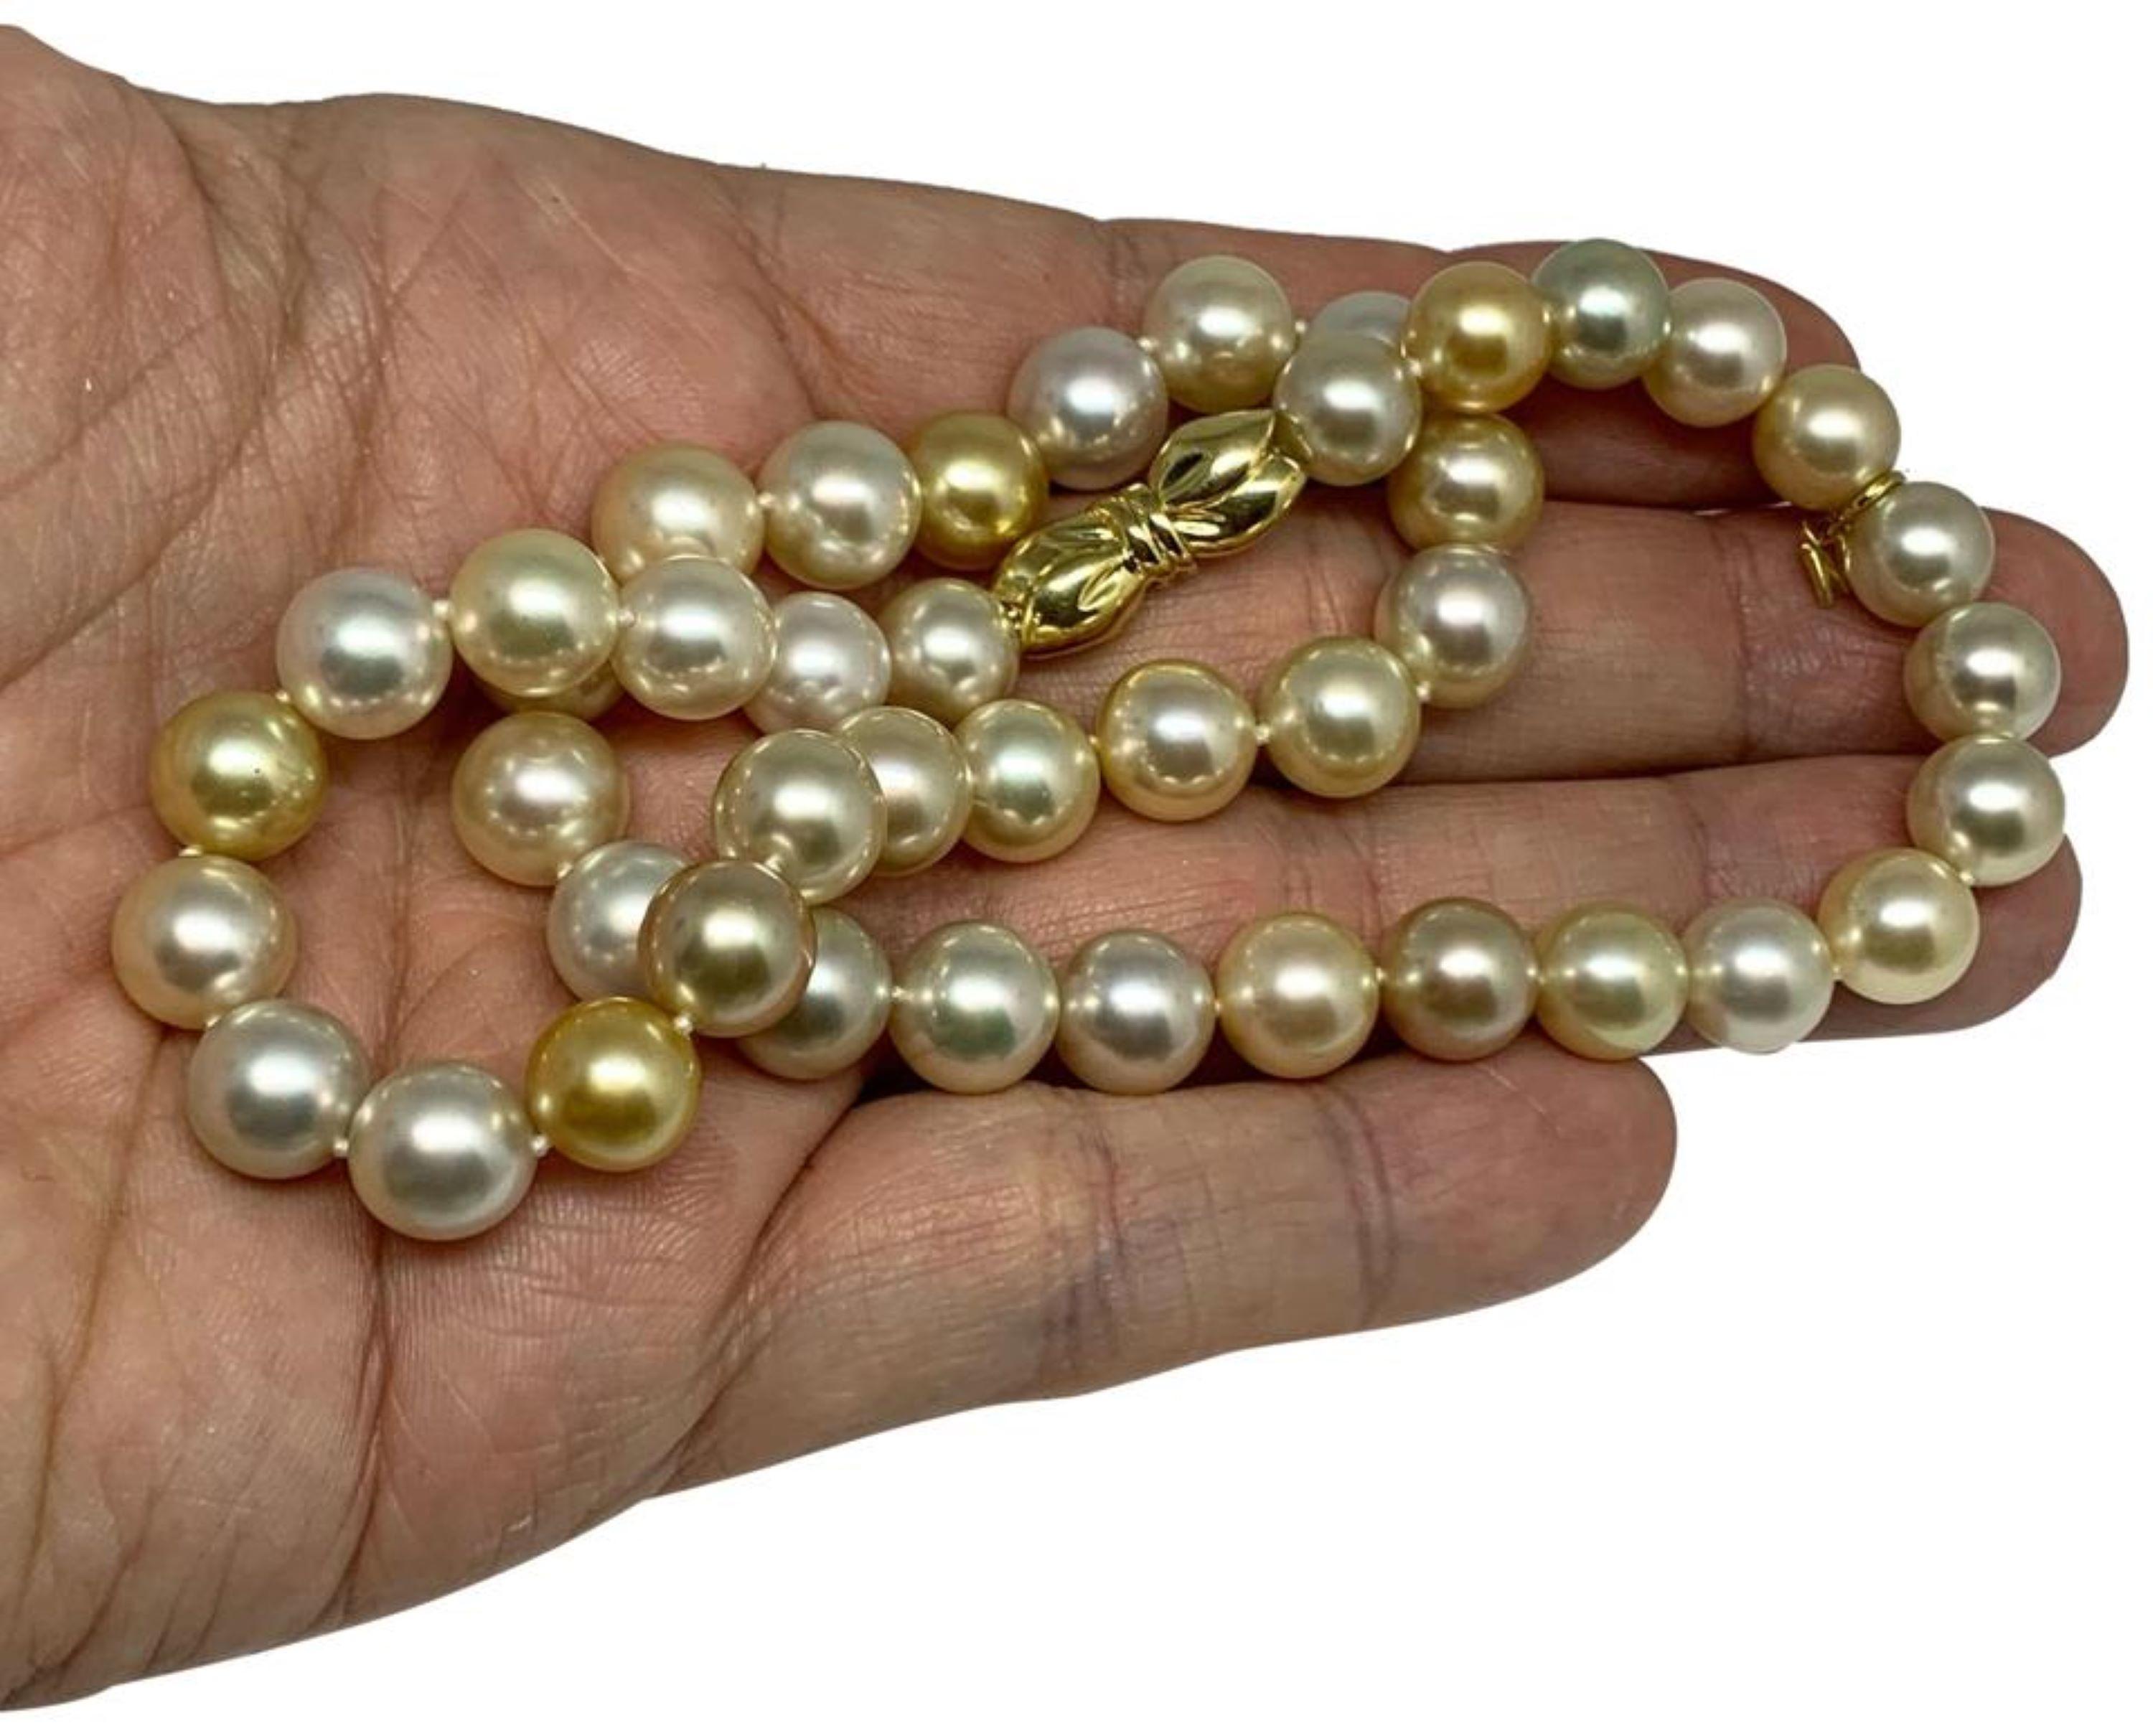 mikimoto golden south sea pearl necklace